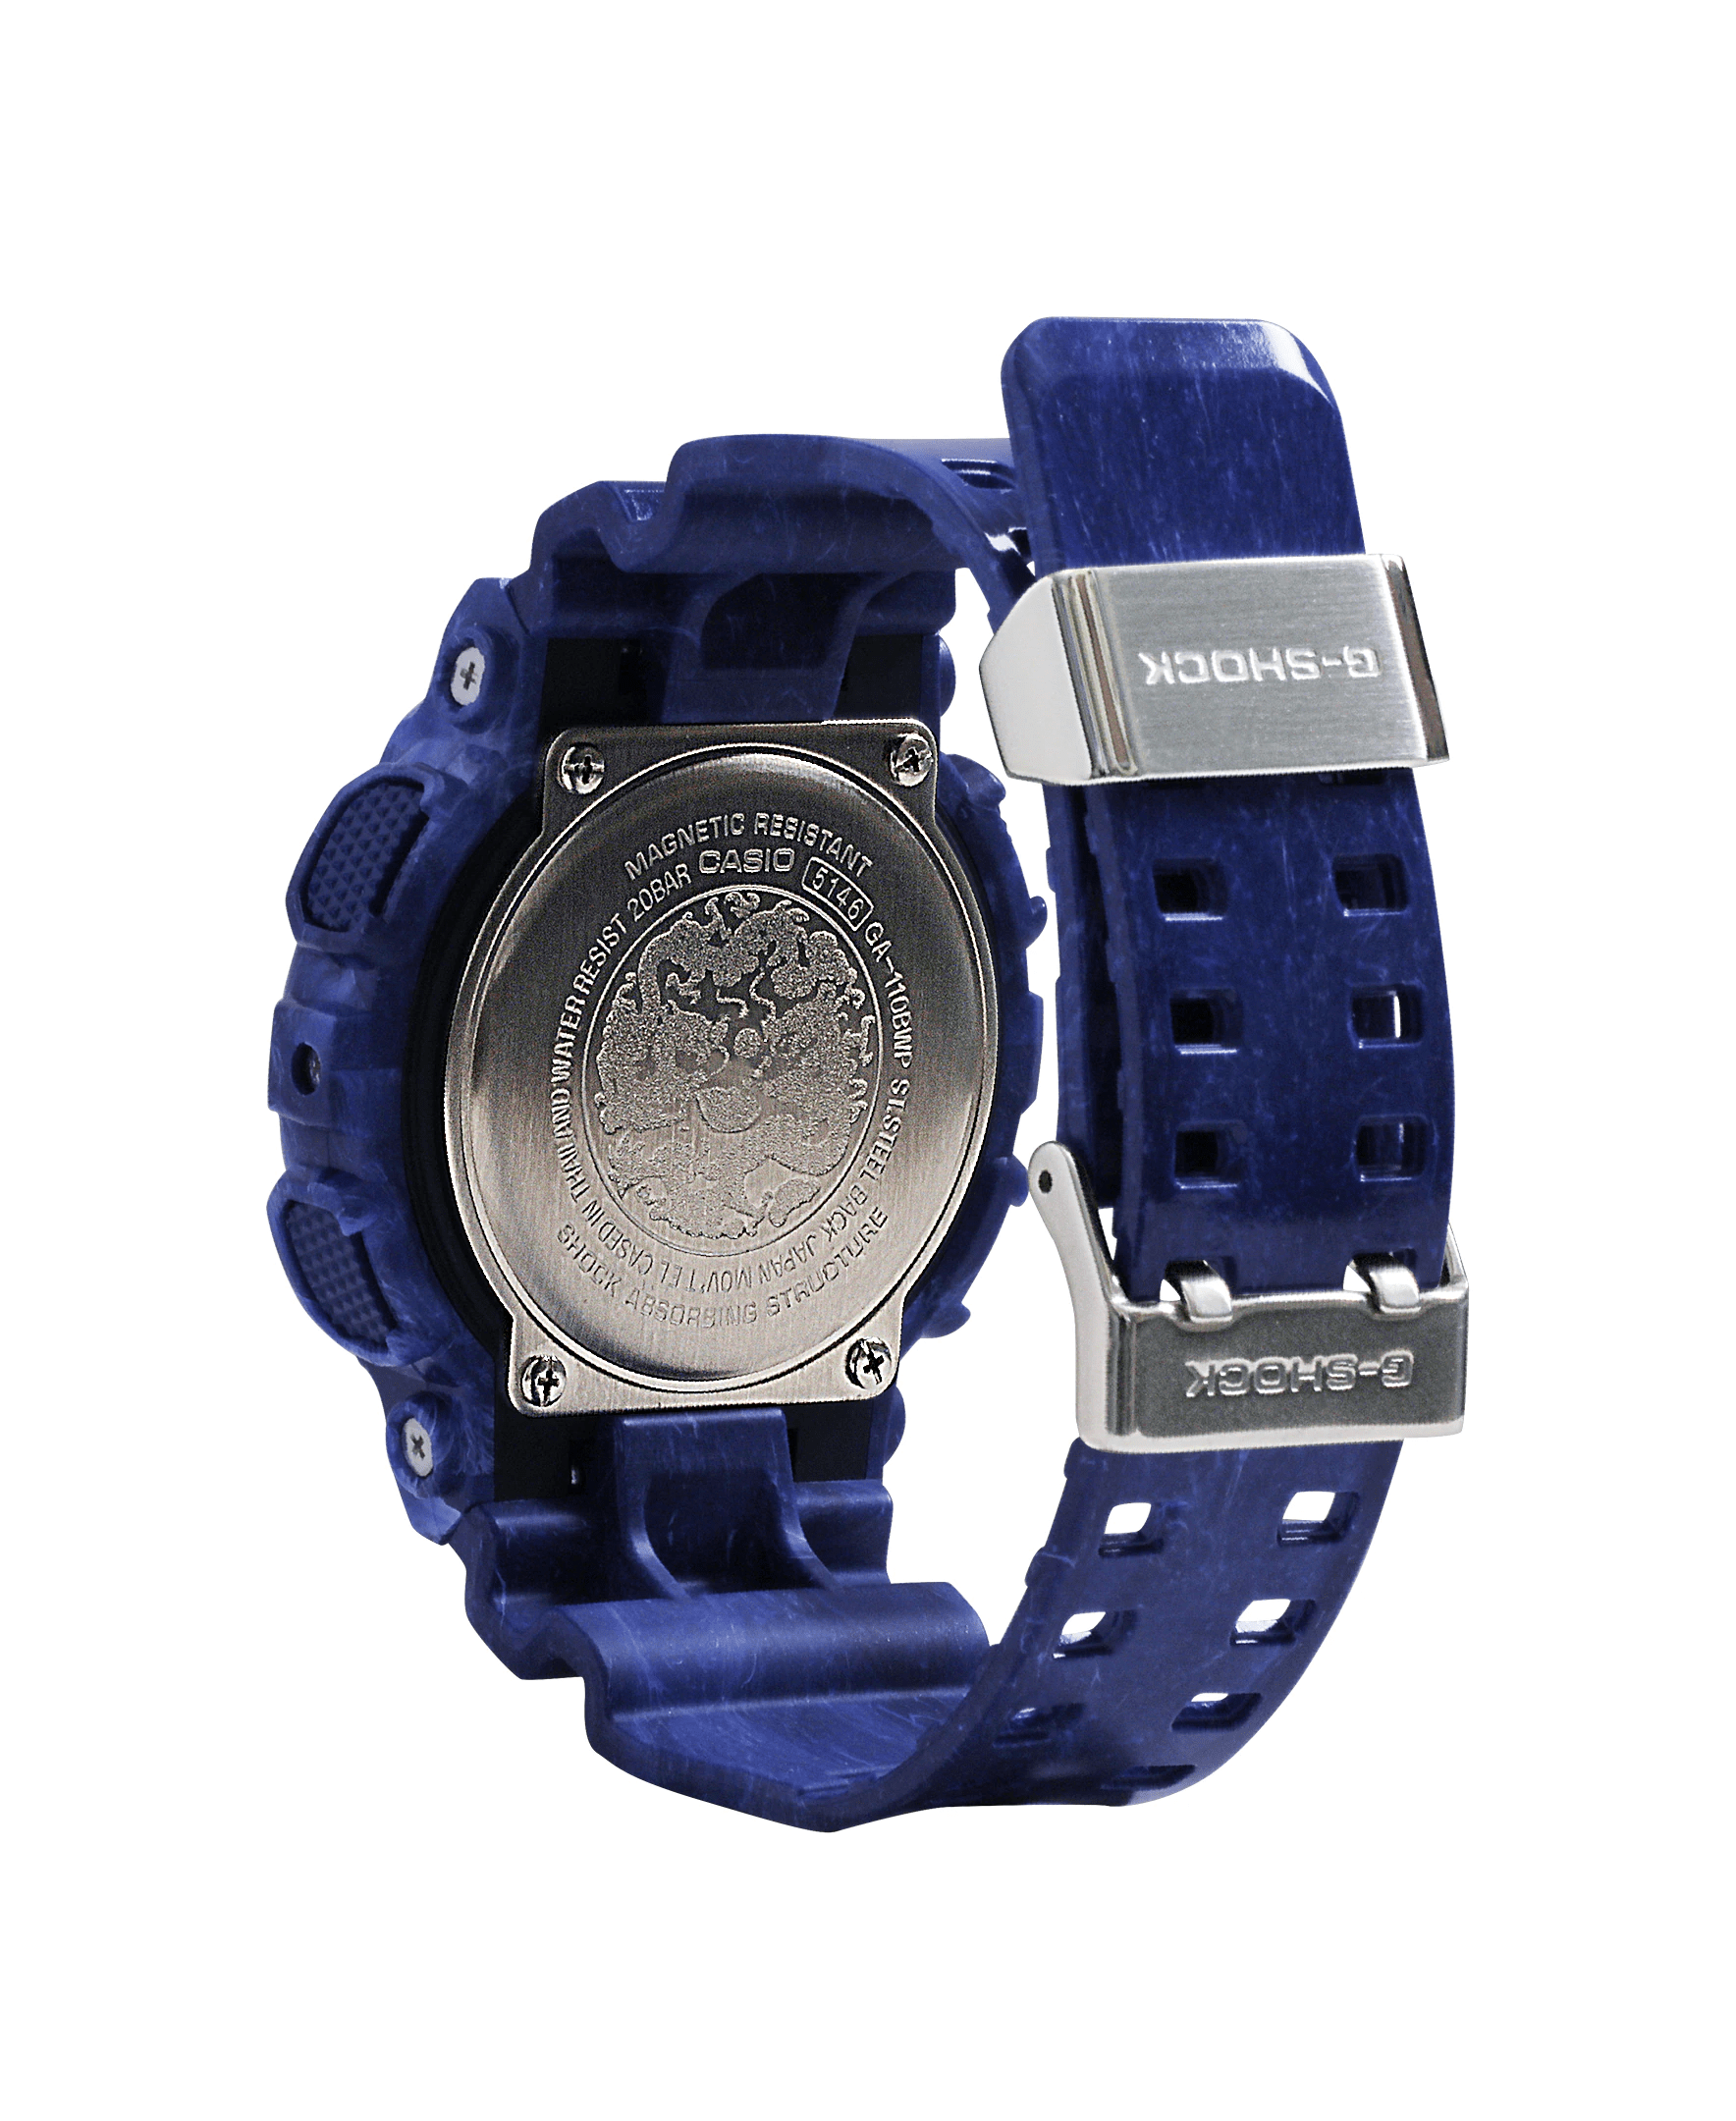 G-Shock Analog-Digital Blue-White Limited Edition Men's Watch GA110BWP-2A